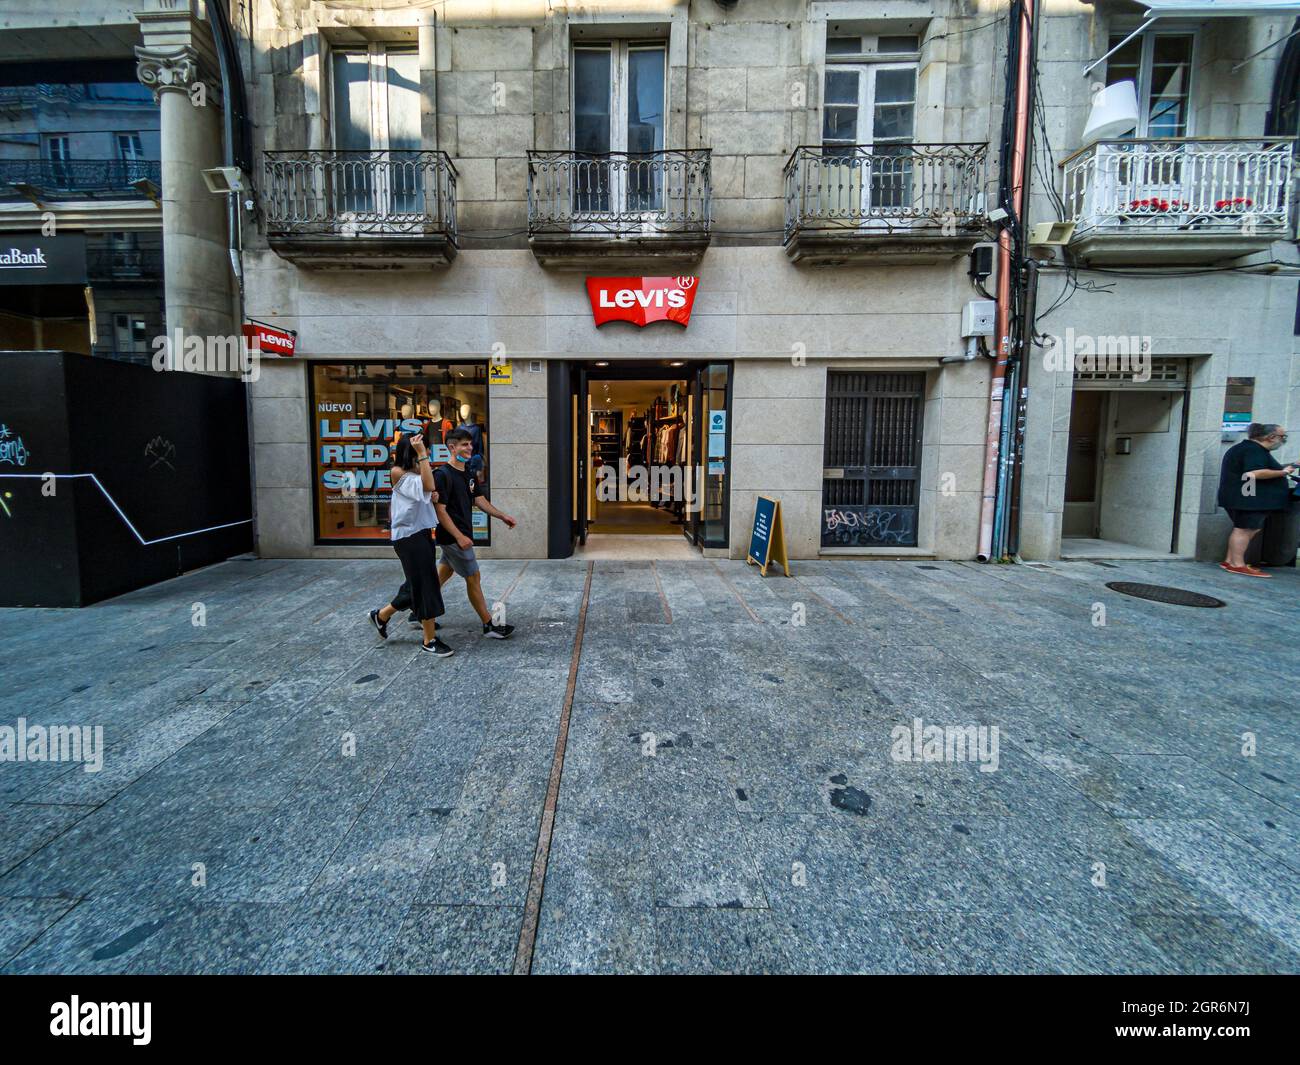 VIGO, SPAIN - Sep 10, 2021: The Levis branded clothes store entrance area  in the street of Vigo, Spain Stock Photo - Alamy